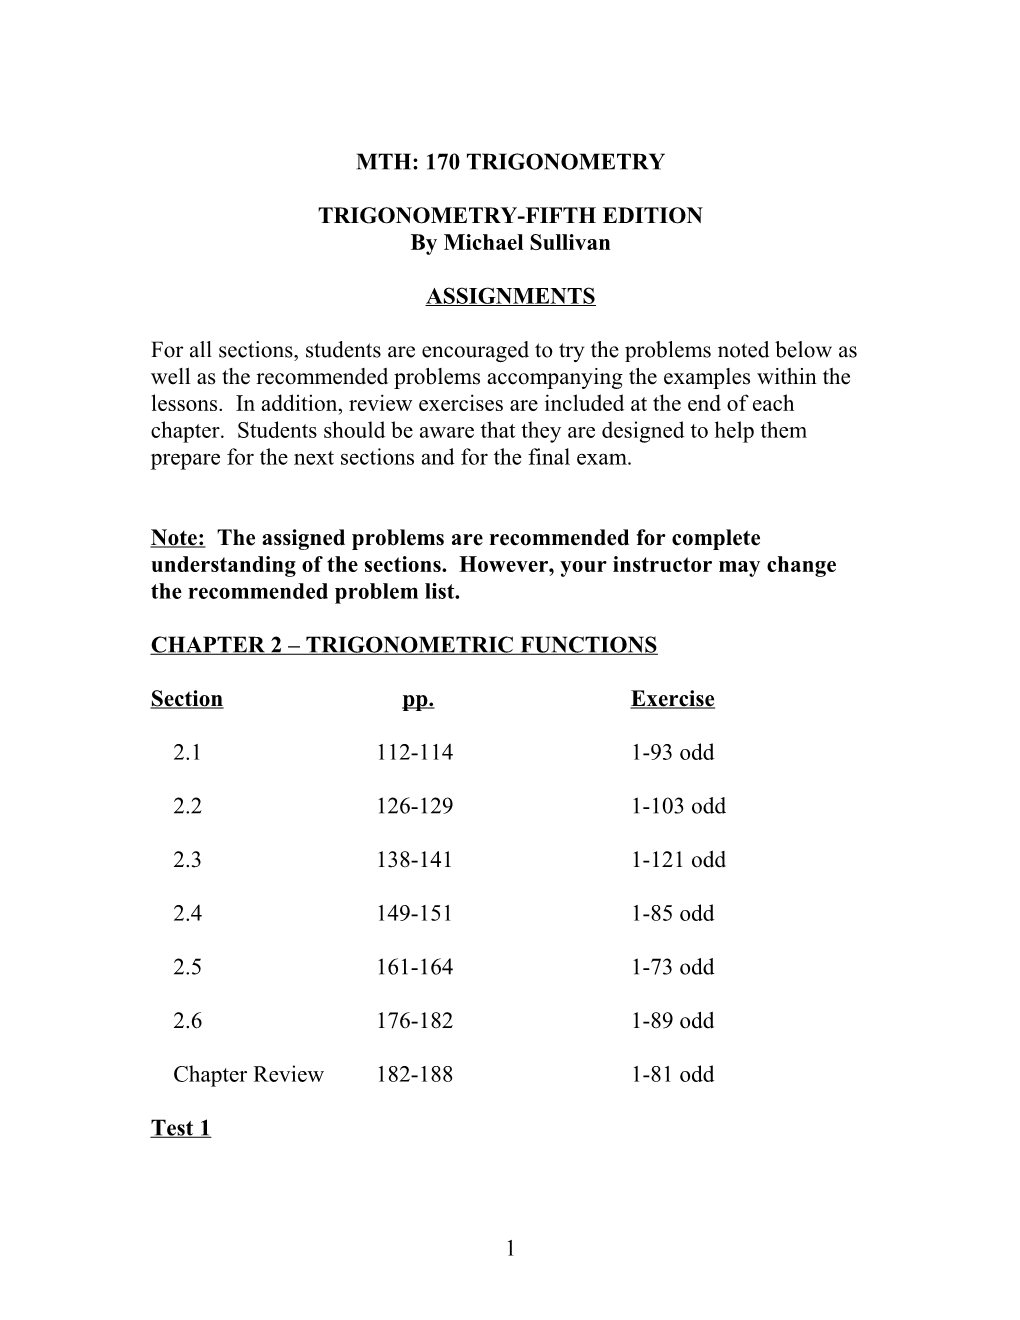 Trigonometry MTH 170Text: Trigonometry-5Th Edition by Michael Sullivan